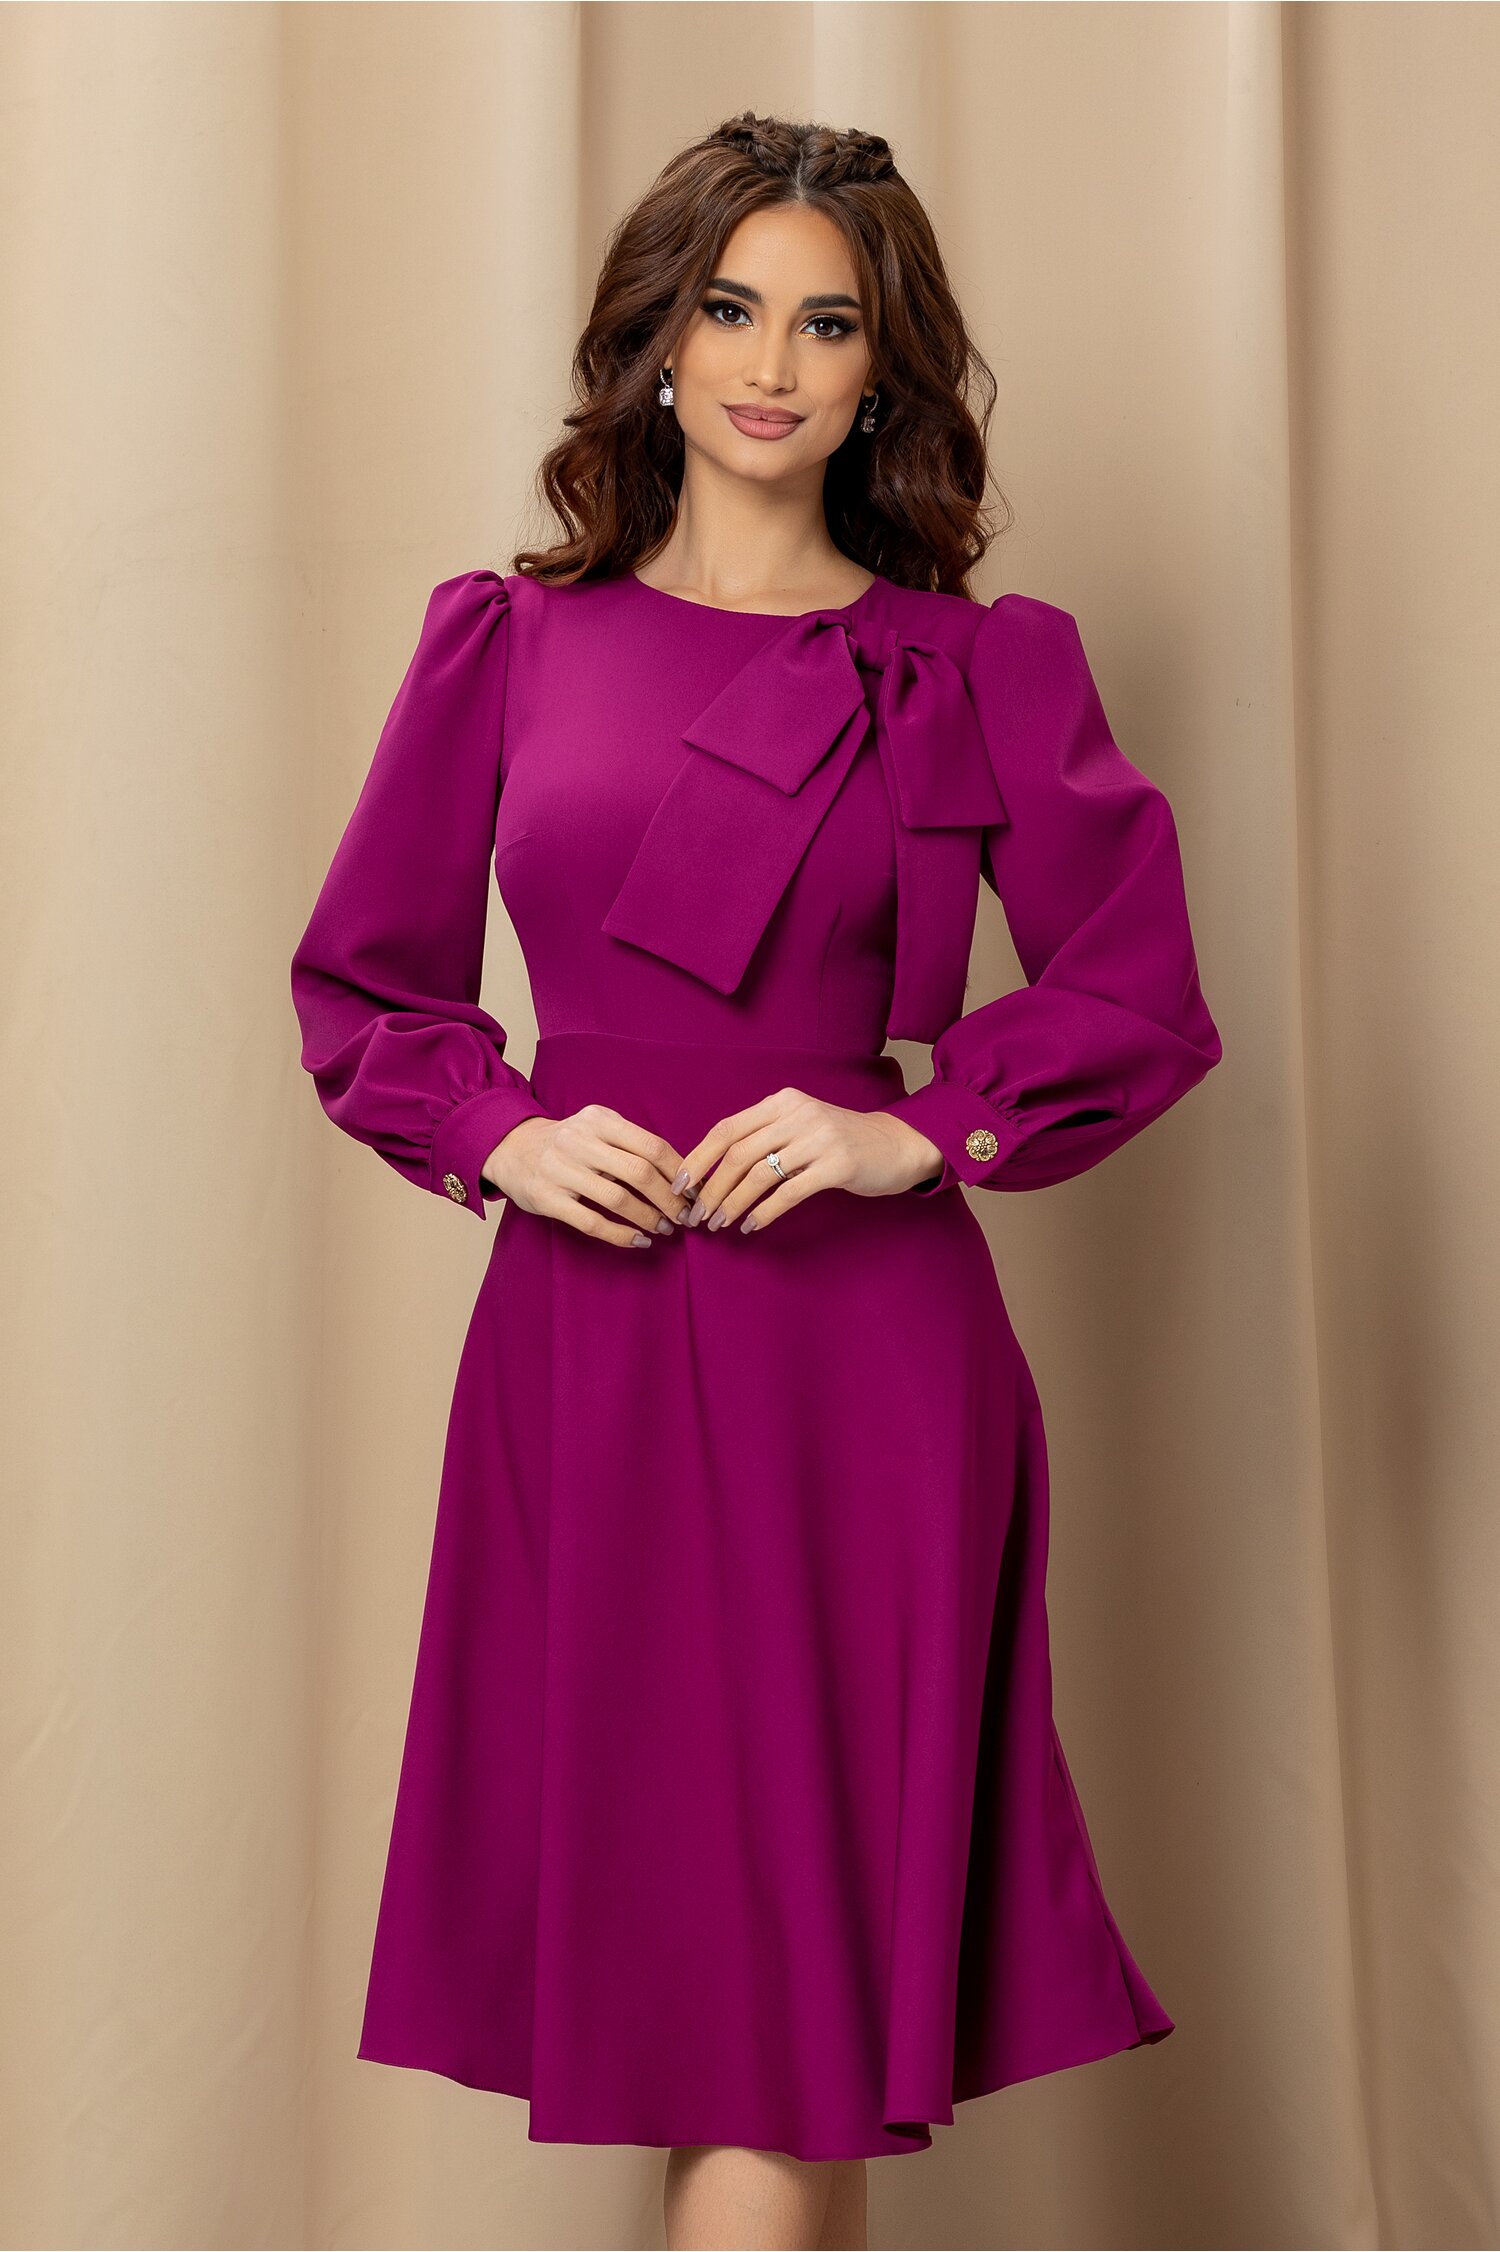 Rochie Dy Fashion violet cu fundita la bust dyfashion.ro imagine 2022 13clothing.ro